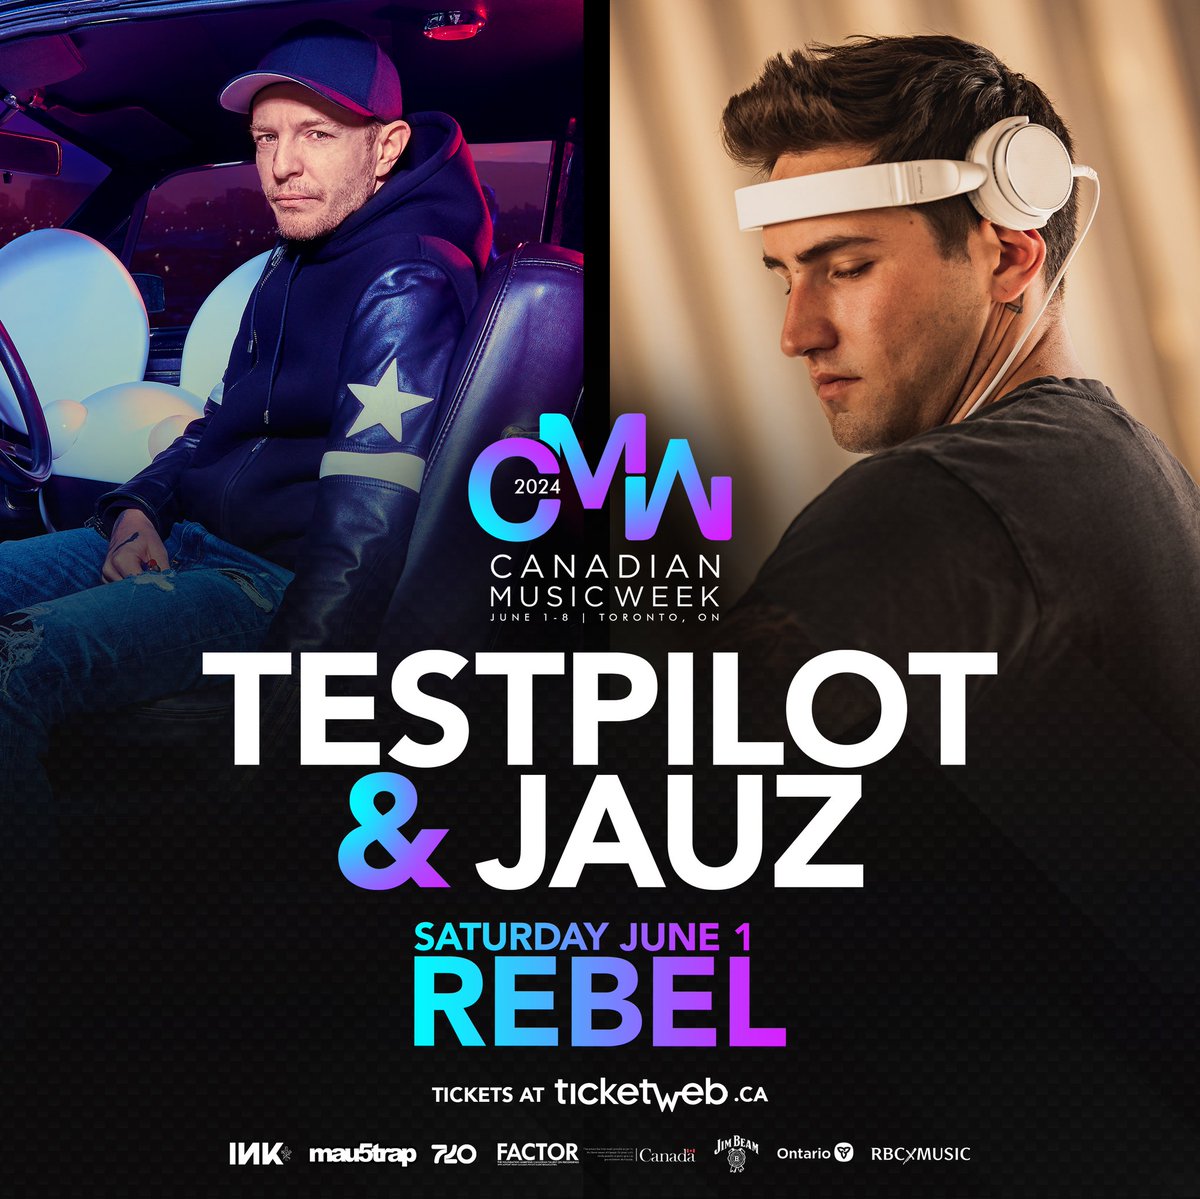 Testpilot & Jauz will headline Rebel on June 1. Tickets on sale now! Link in bio!bit.ly/4dsuEfo 🎟🔗 #CMW2024 #canadianmusicweek #deadmau5 #Toronto #torontoconcerts #testpilot #jauz #musicfestival #festival2024 #musicsummit